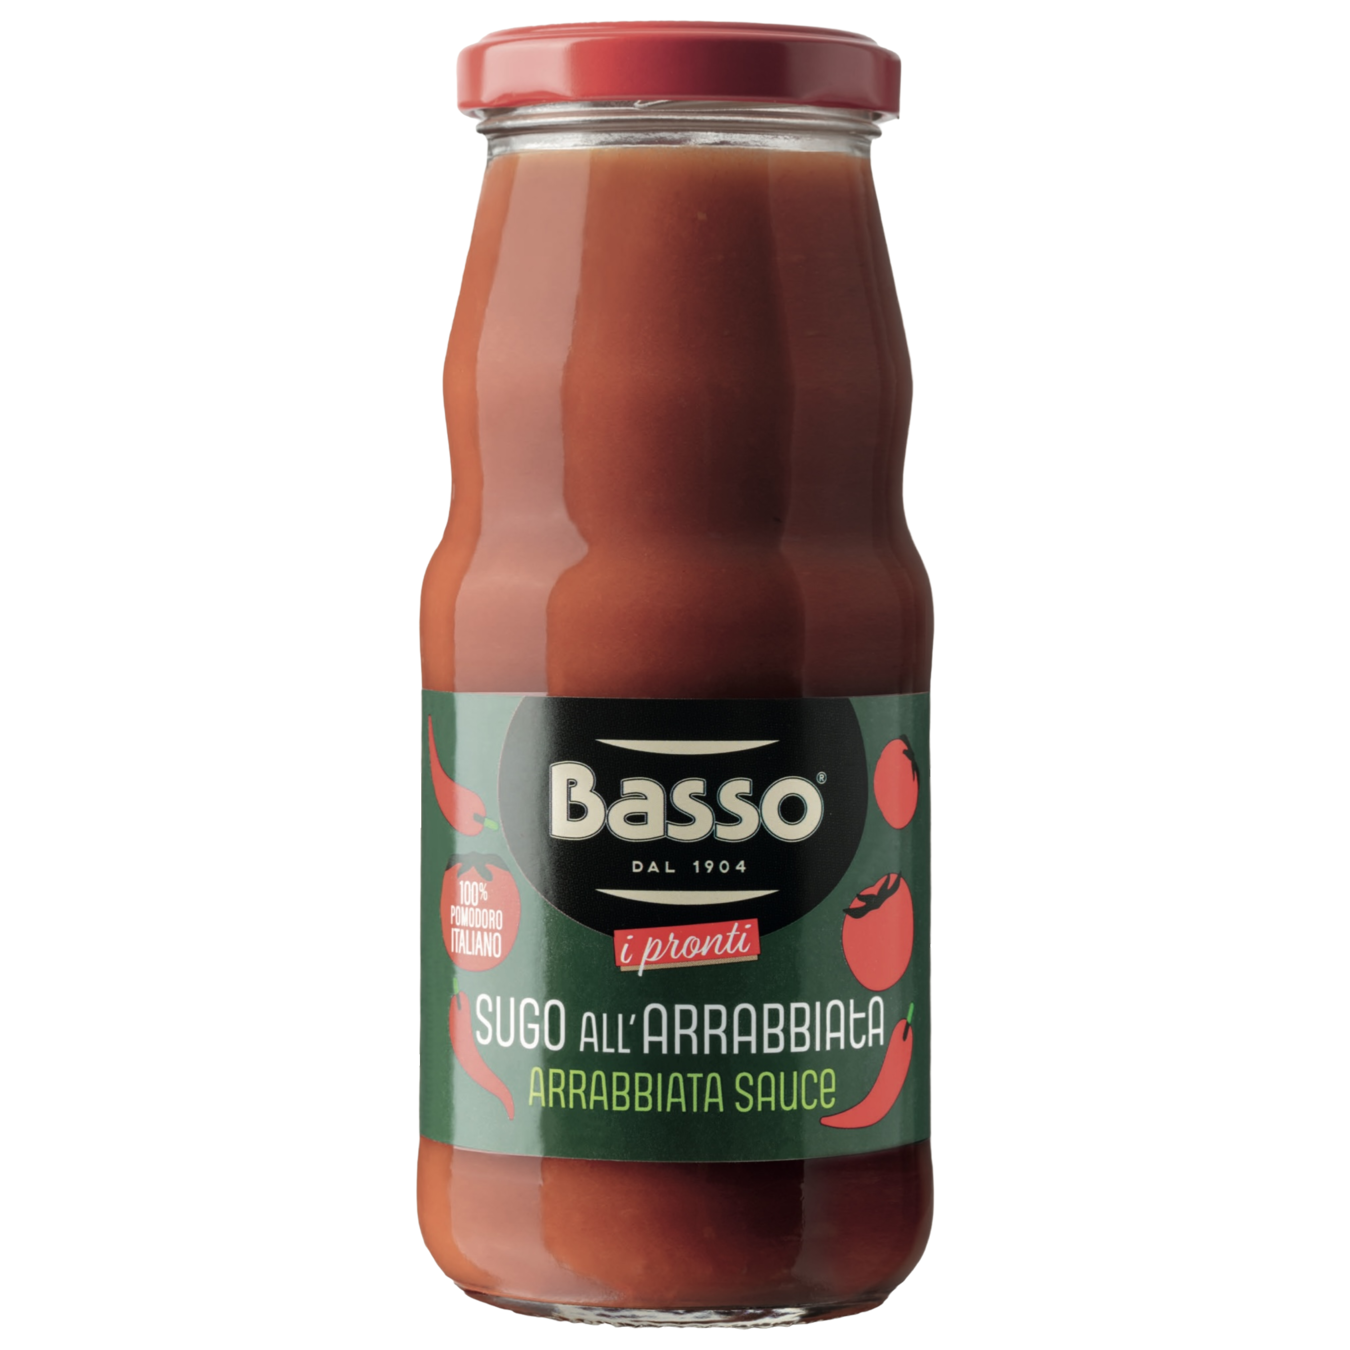 Basso Sauce Arrabiata 360g